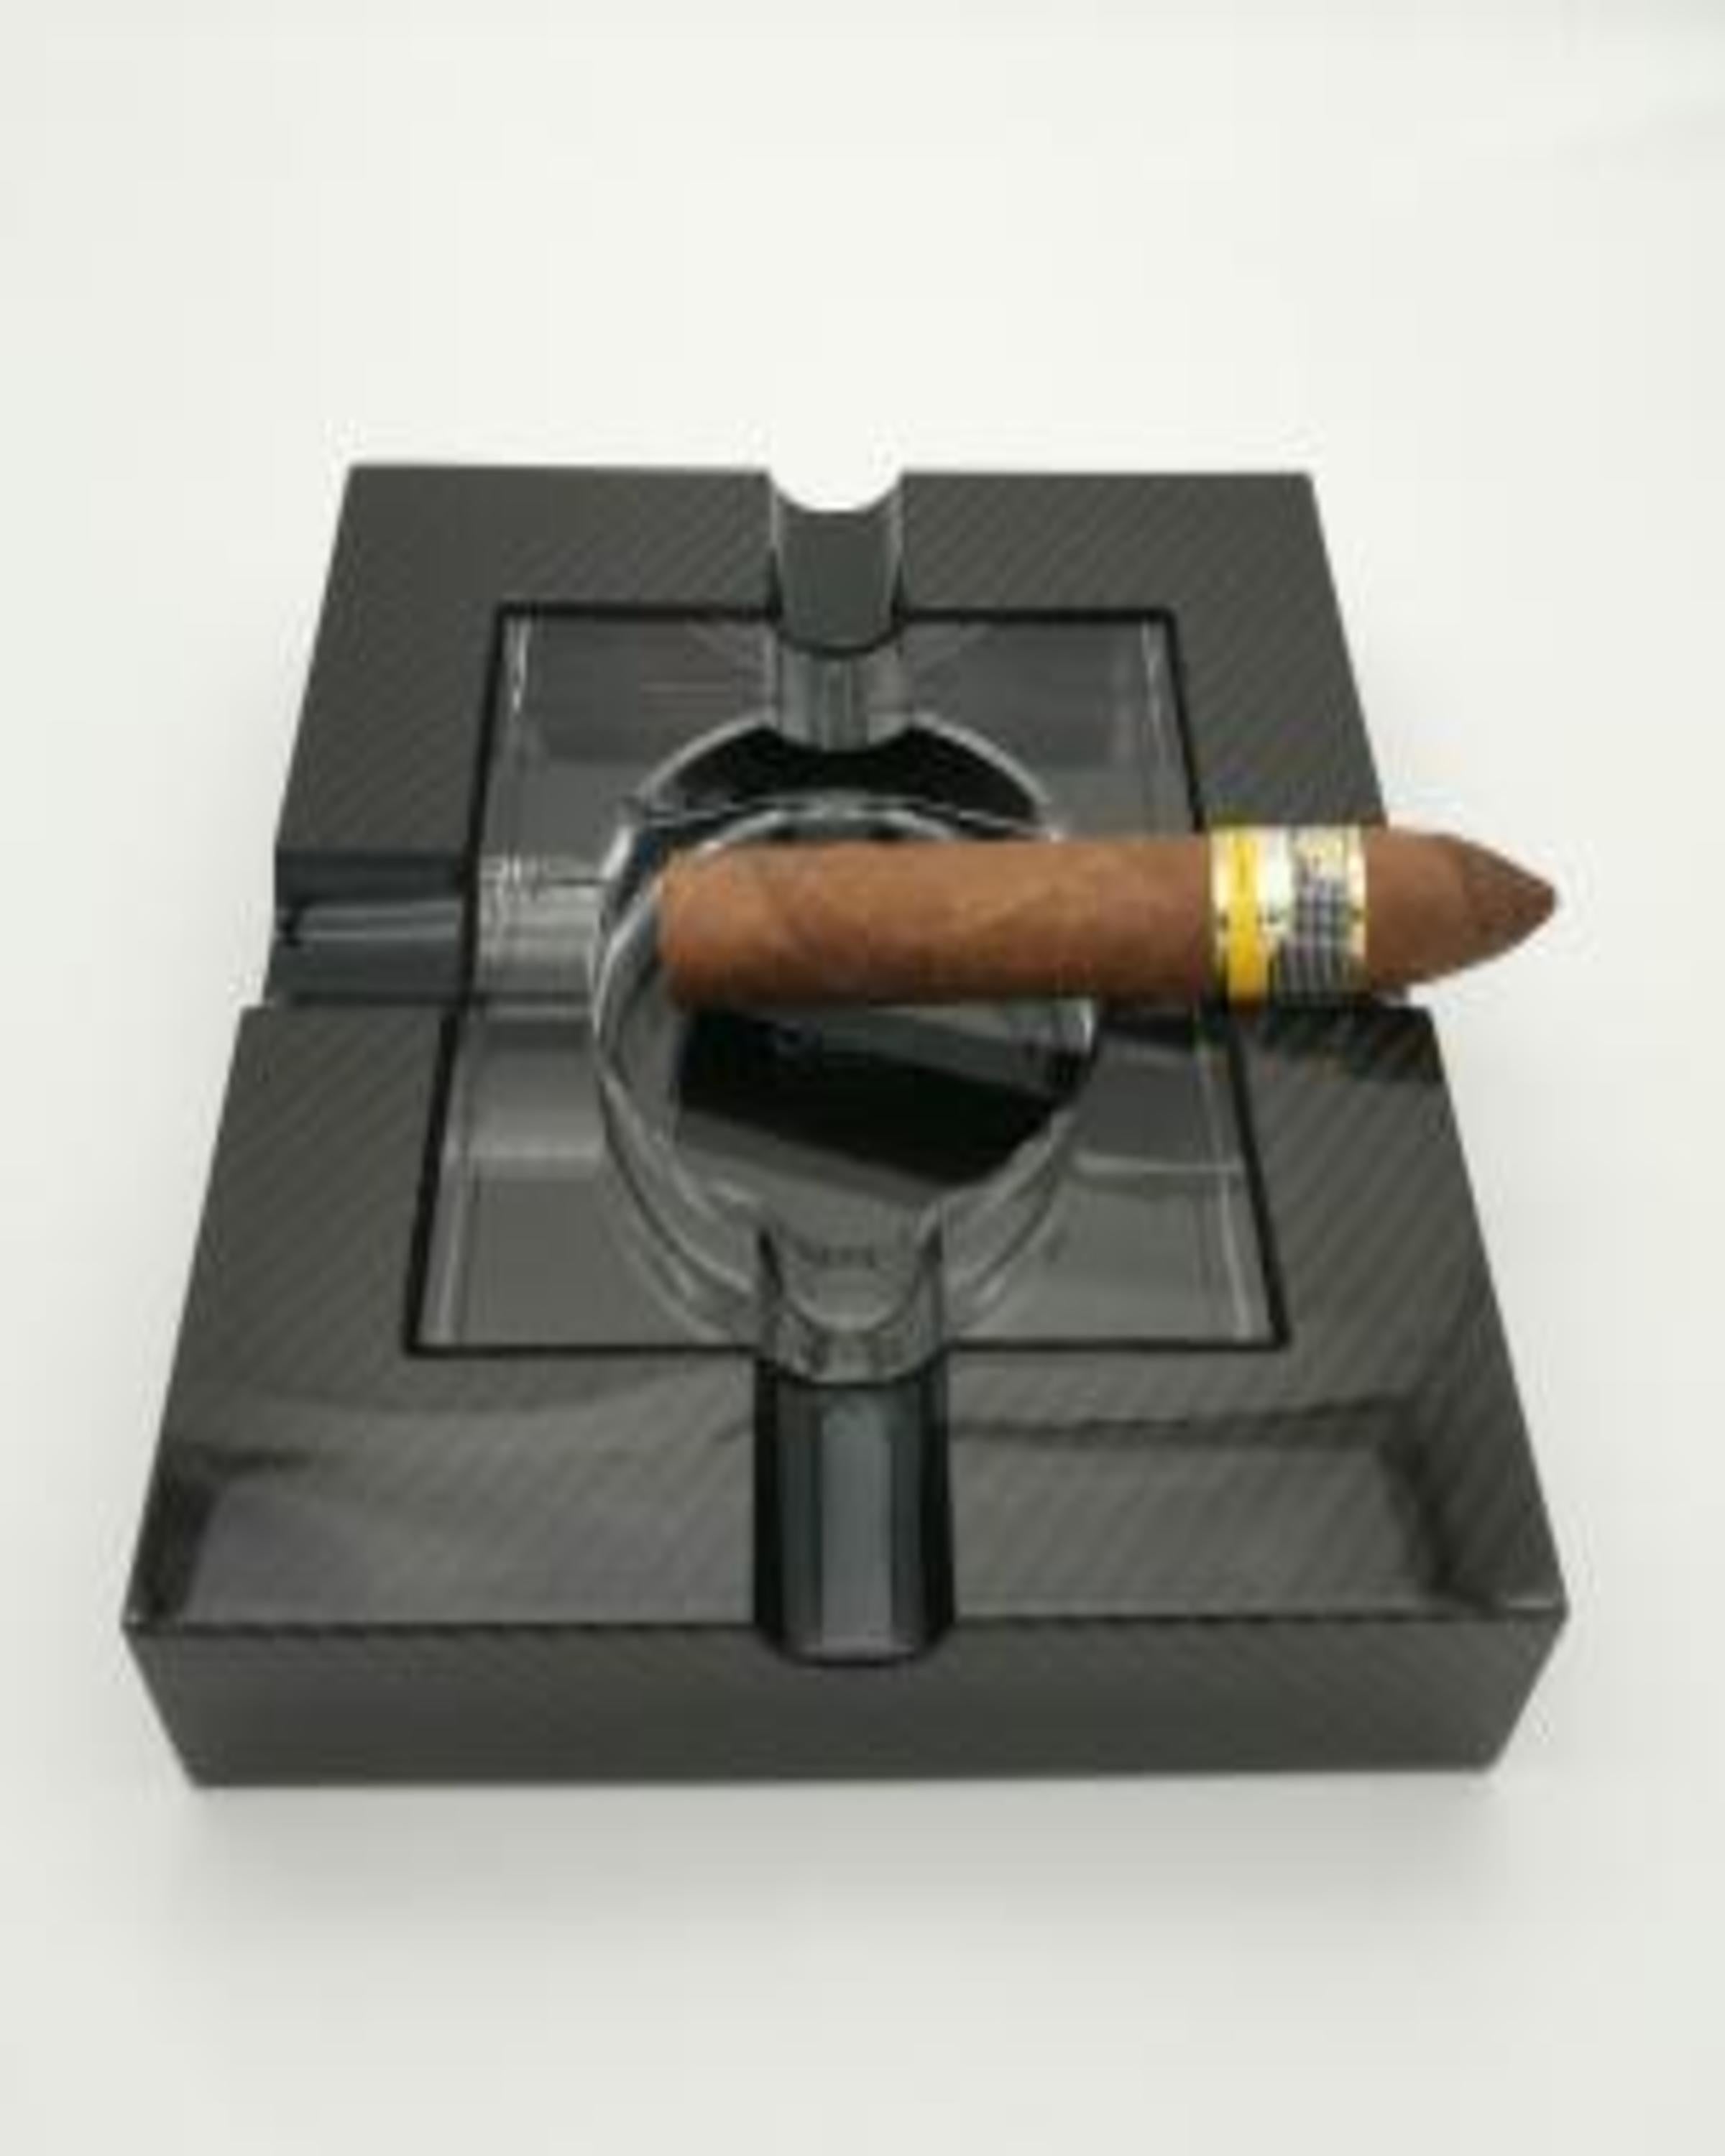 Buy Cigar Ashtray Online In India -  India